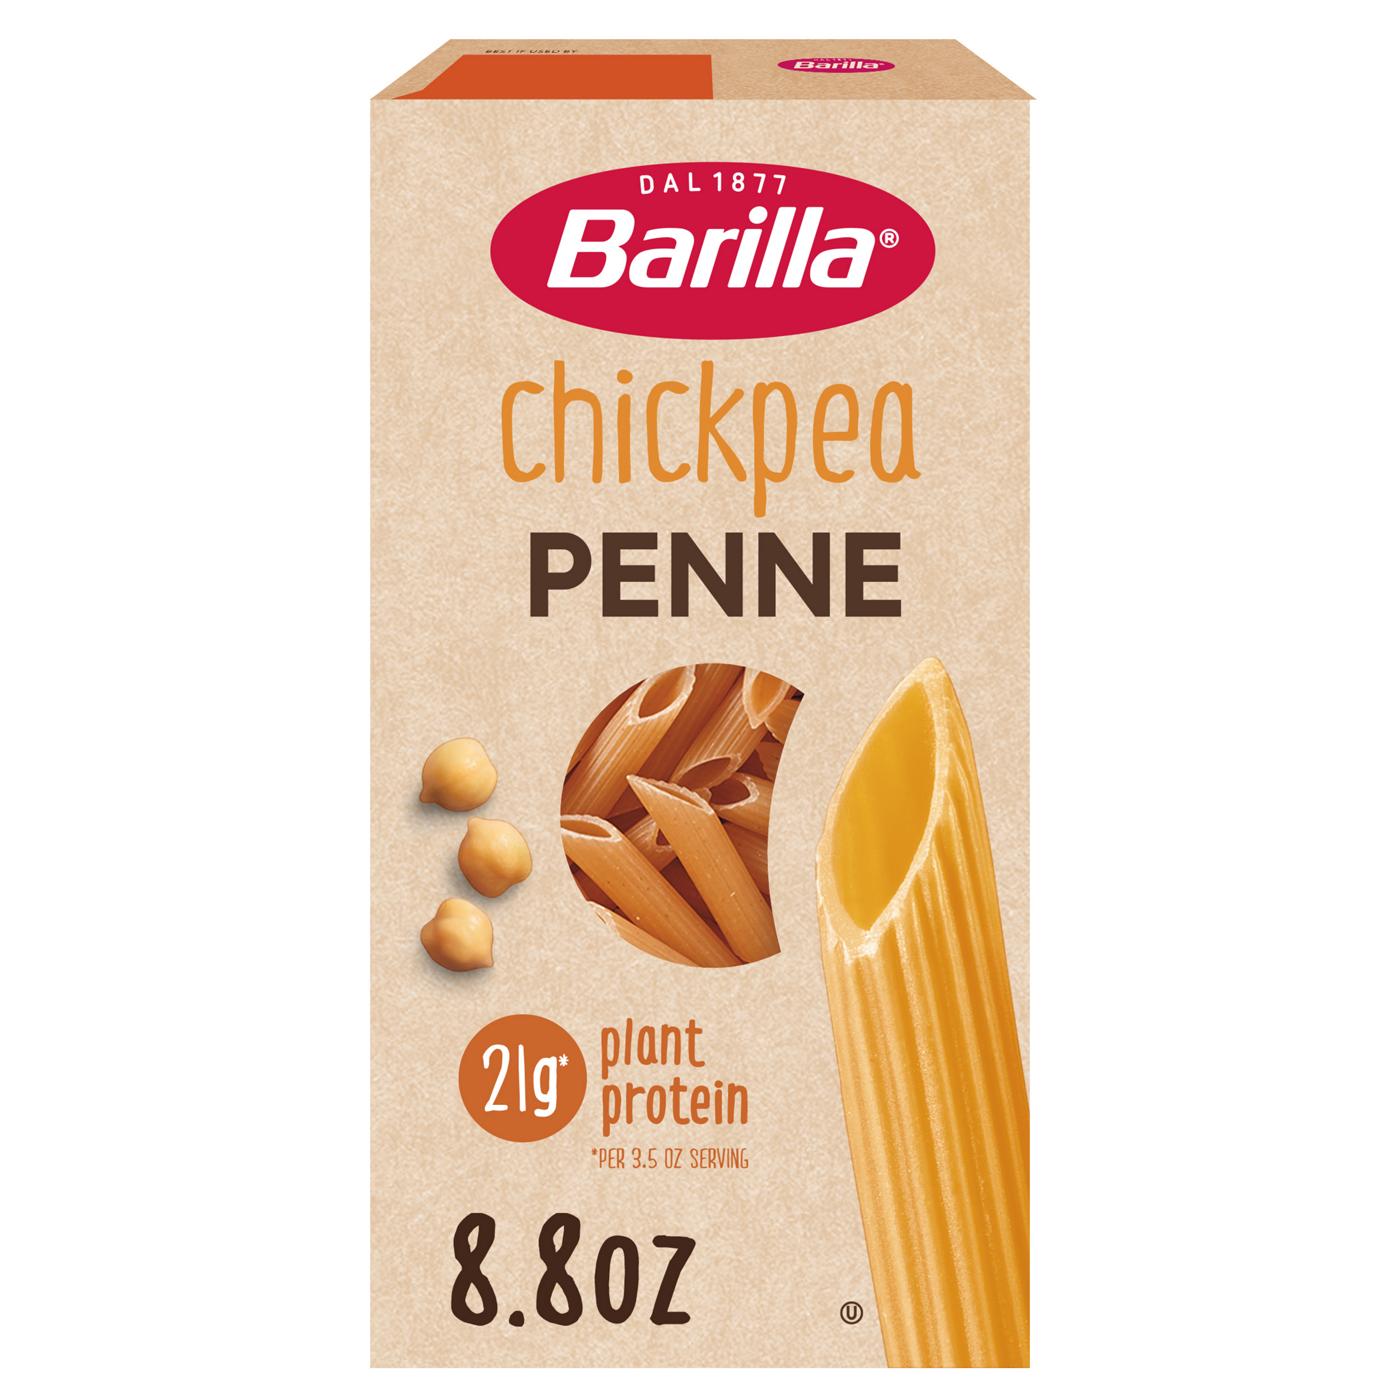 Barilla Chickpea Penne Pasta; image 1 of 6